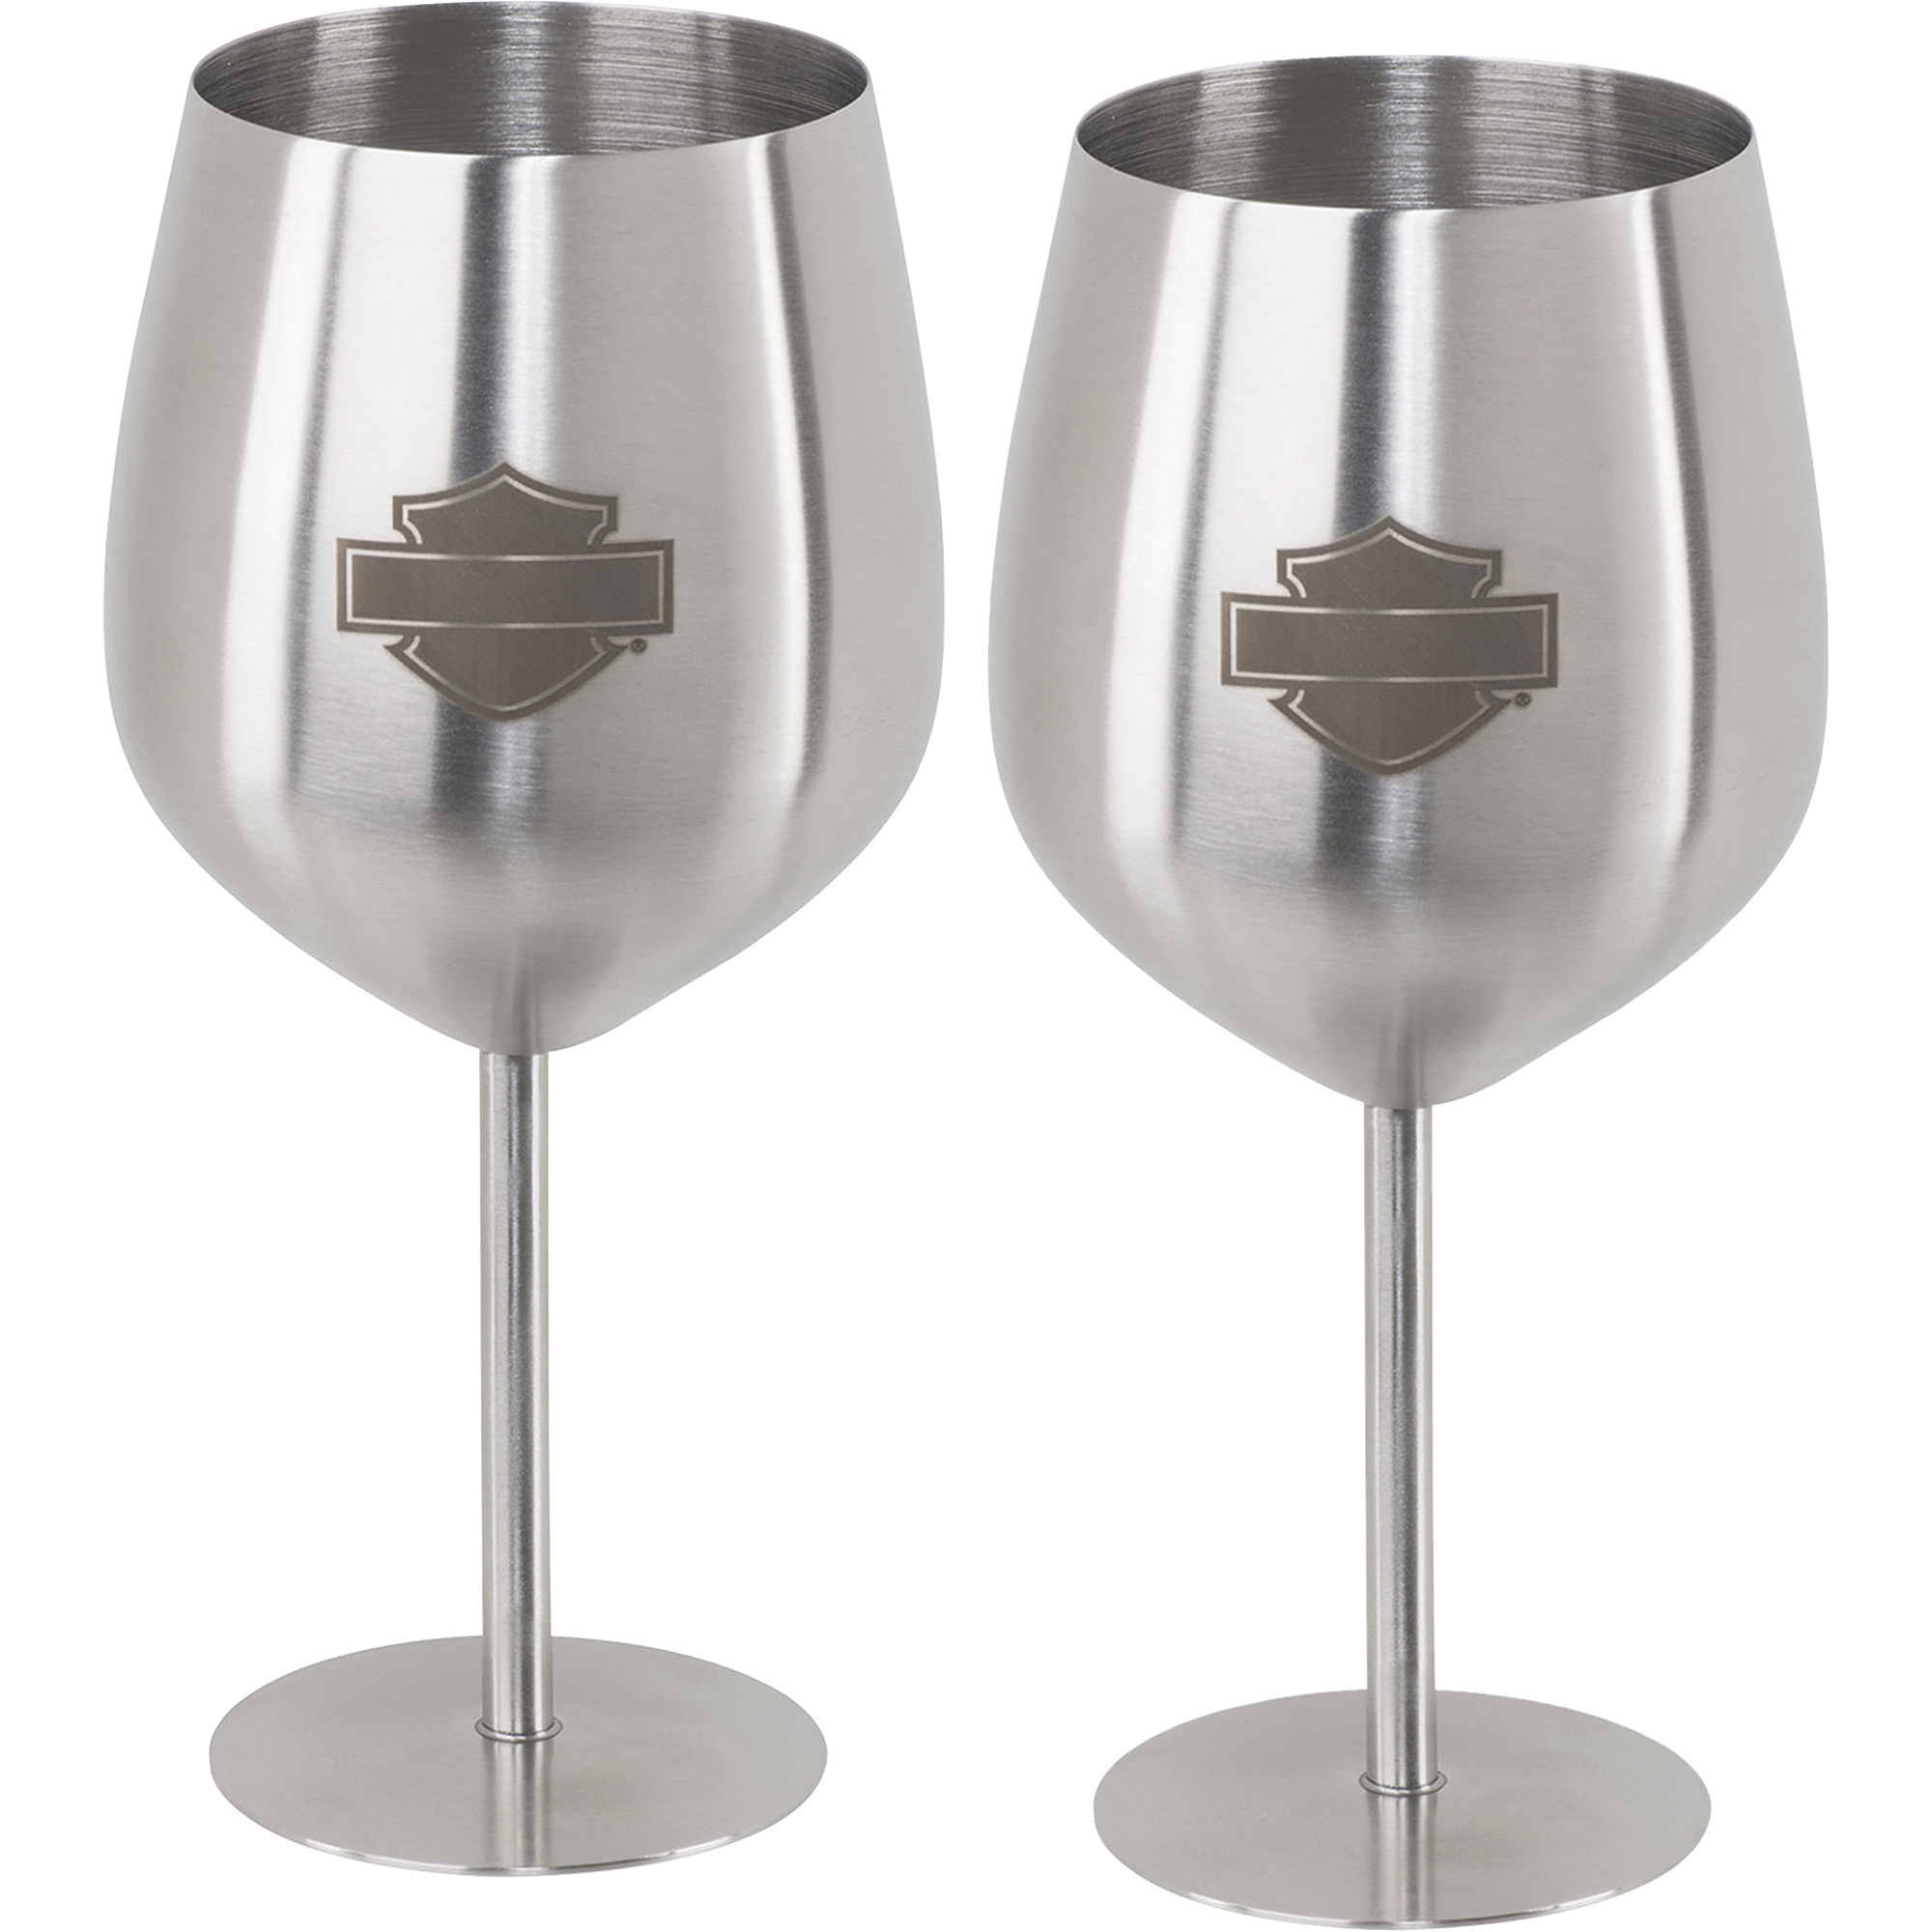 Stainless Steel Wine Glasses - Set of 2